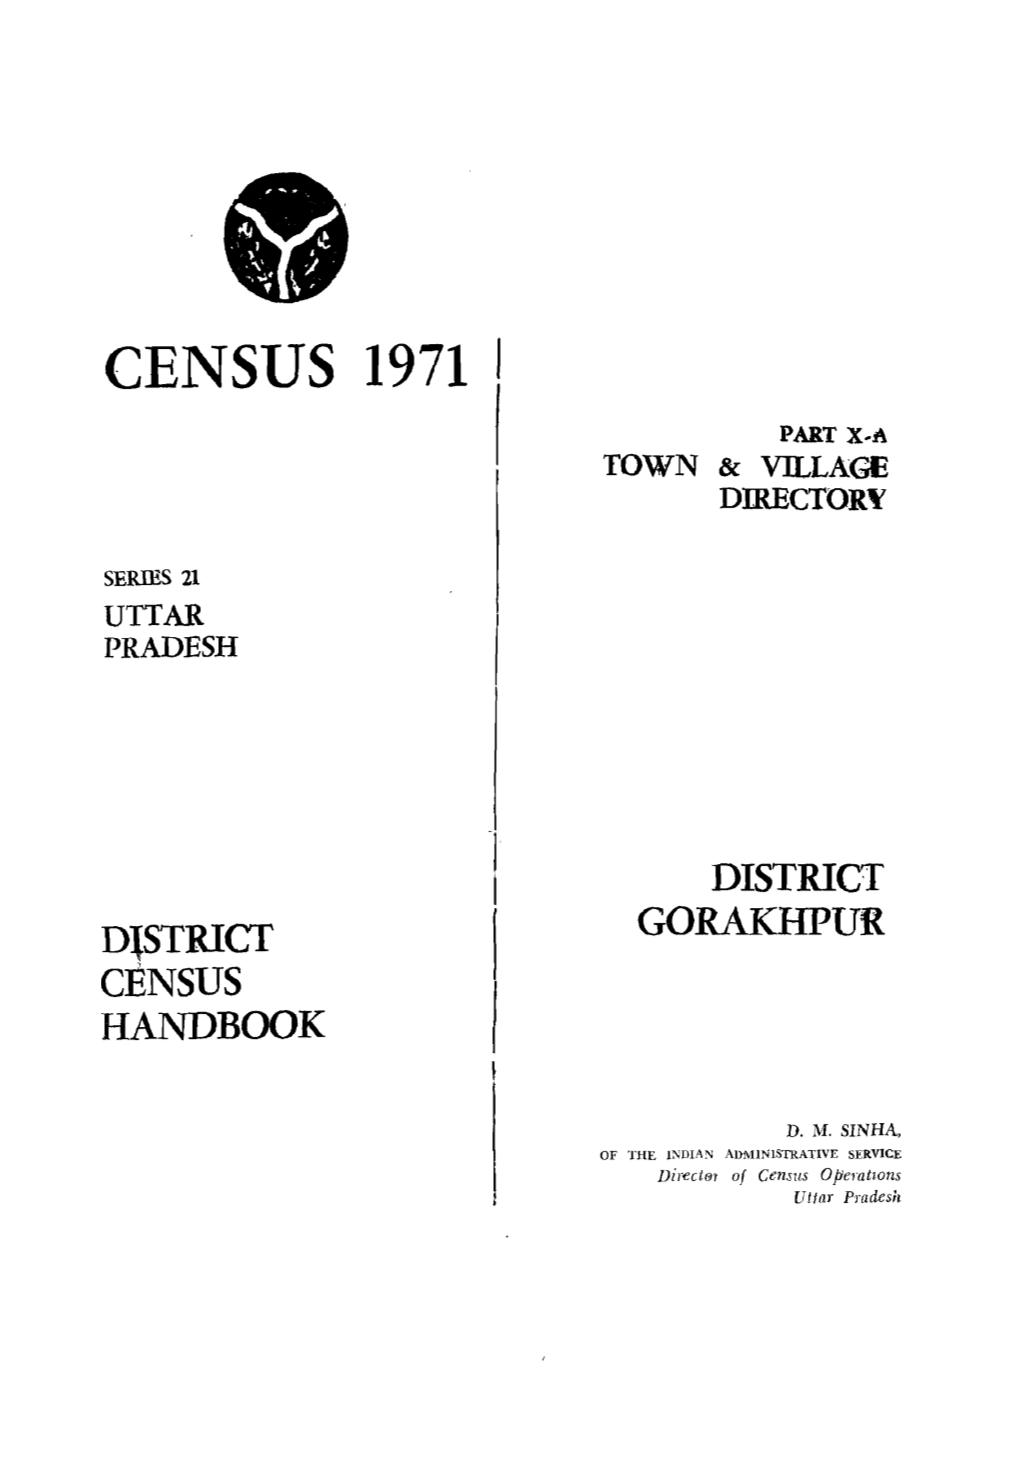 District Census Handbook, Gorakhpur, Part X-A, Series-21